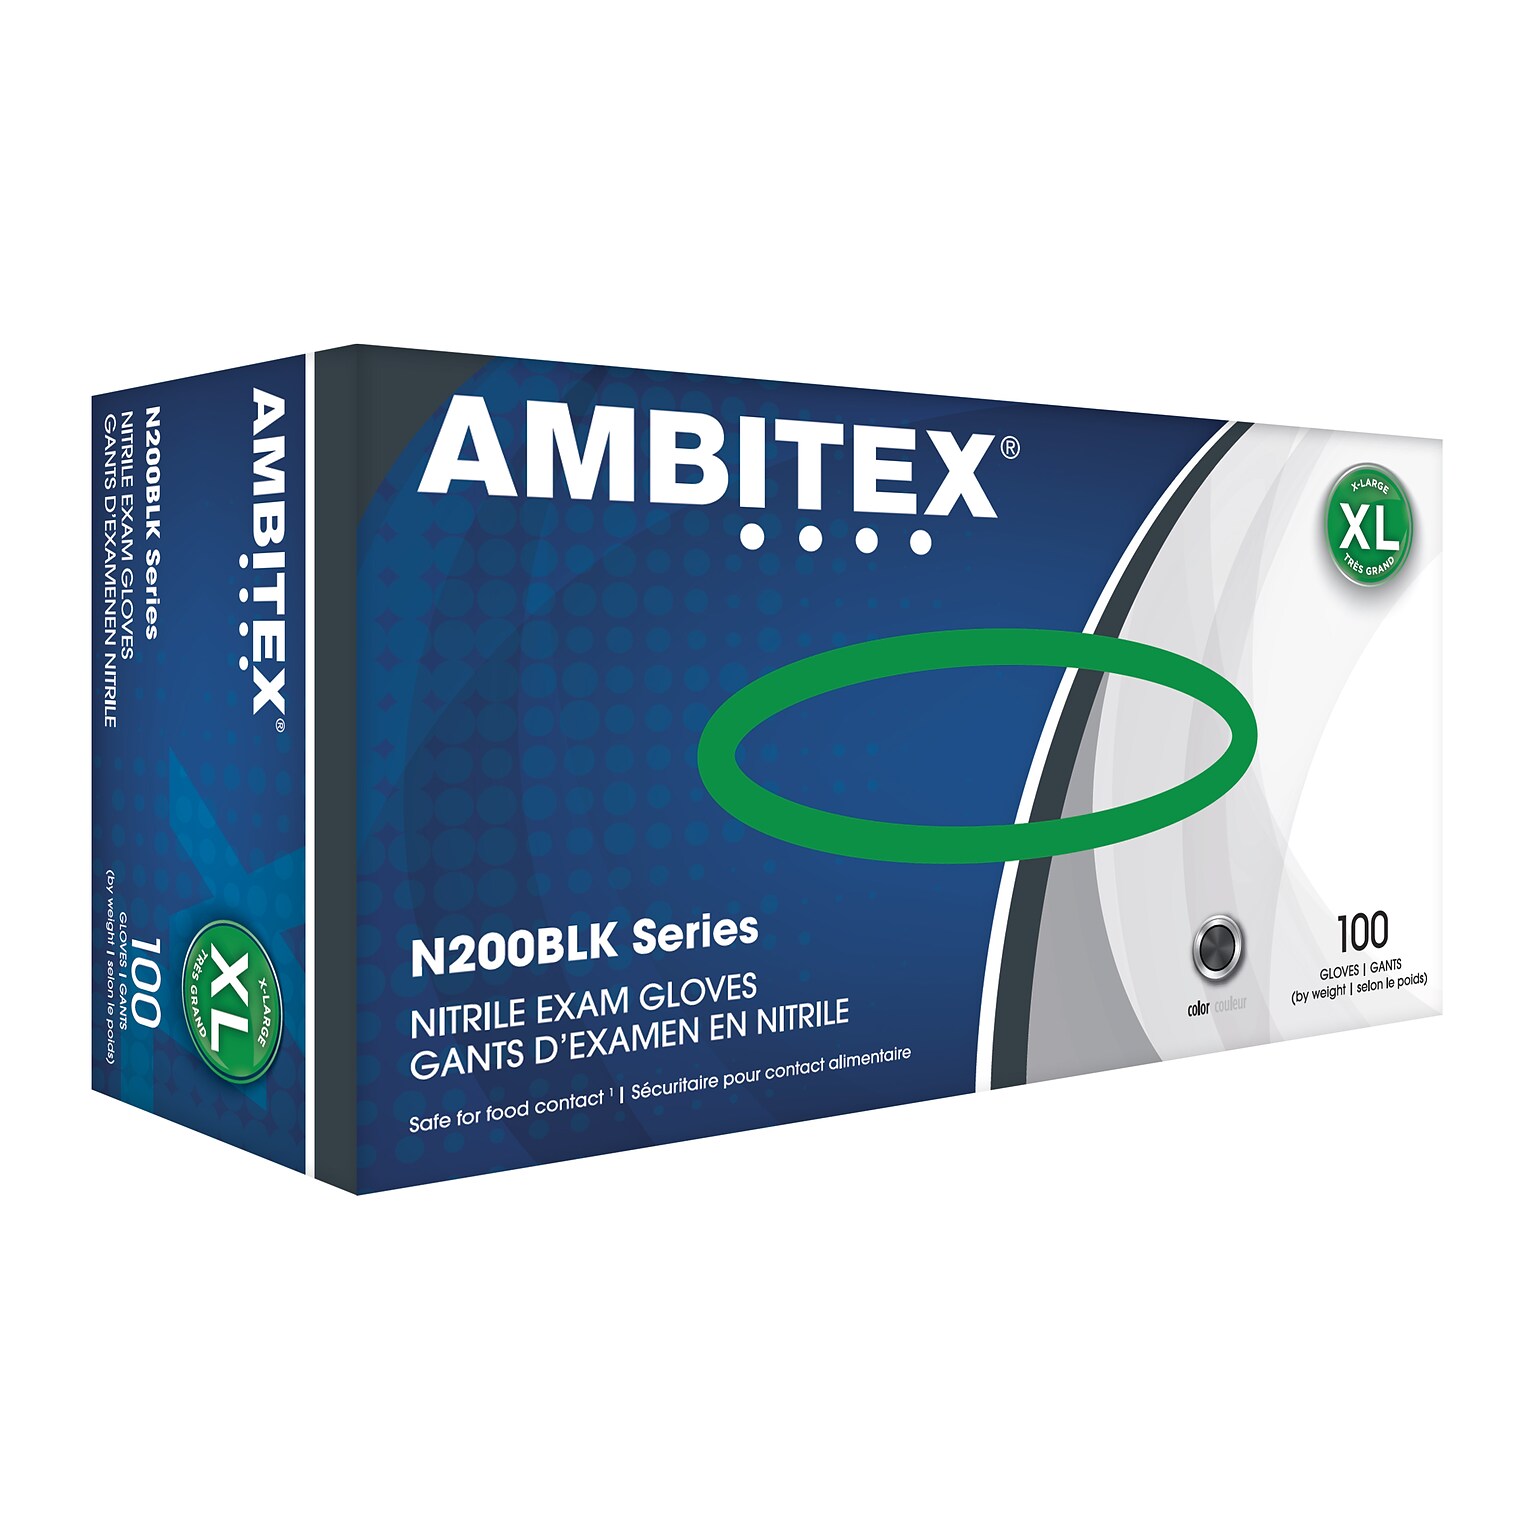 Ambitex N200BLK Series Powder Free Black Nitrile Gloves, XL, 100/Box (NXL200BLK)